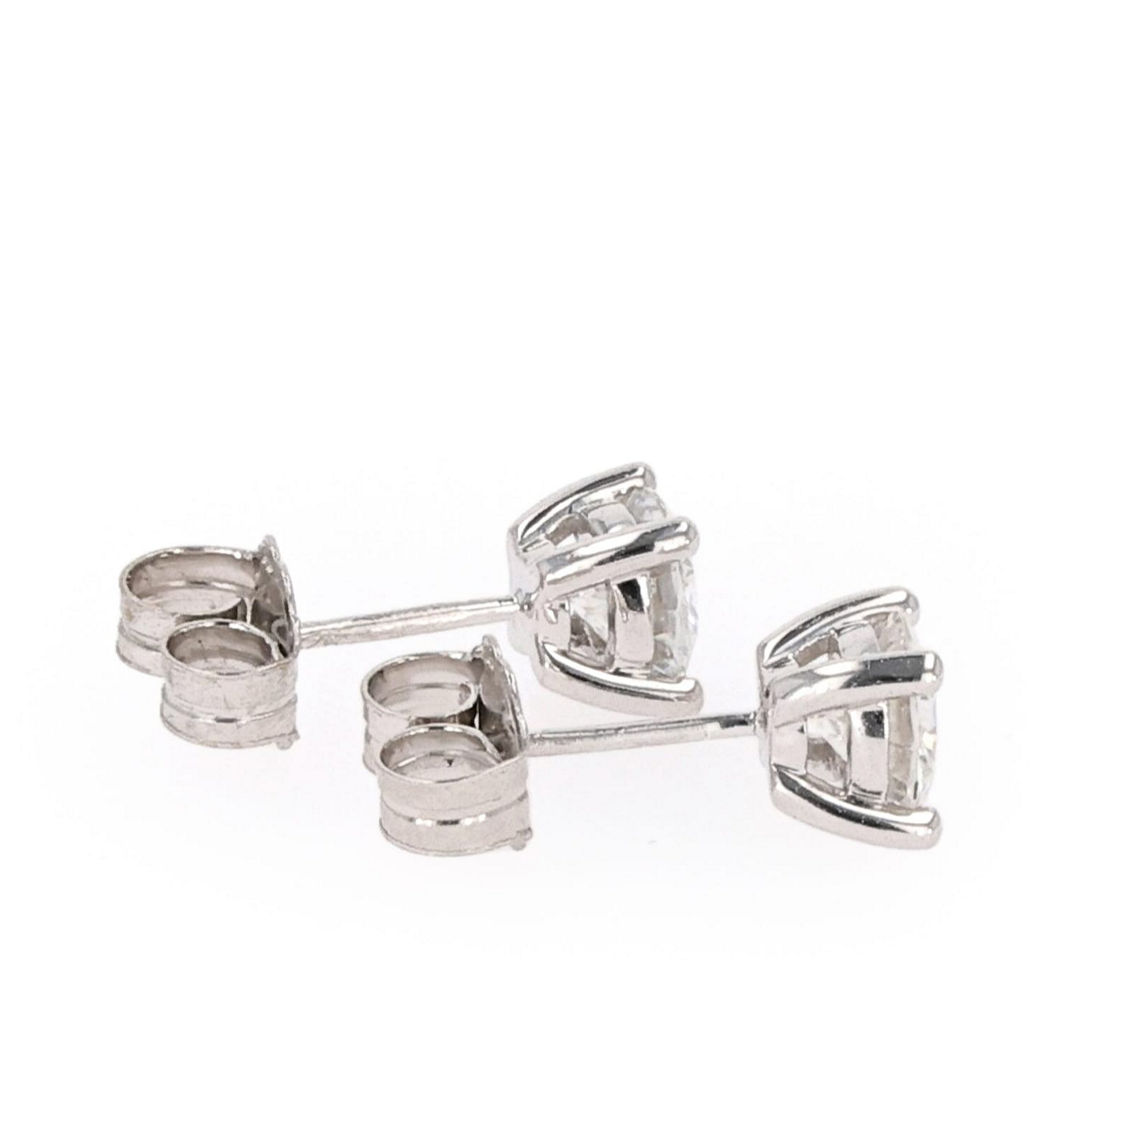 Charles & Colvard 1.60cttw Moissanite Stud Earring in Sterling Silver - Image 3 of 5